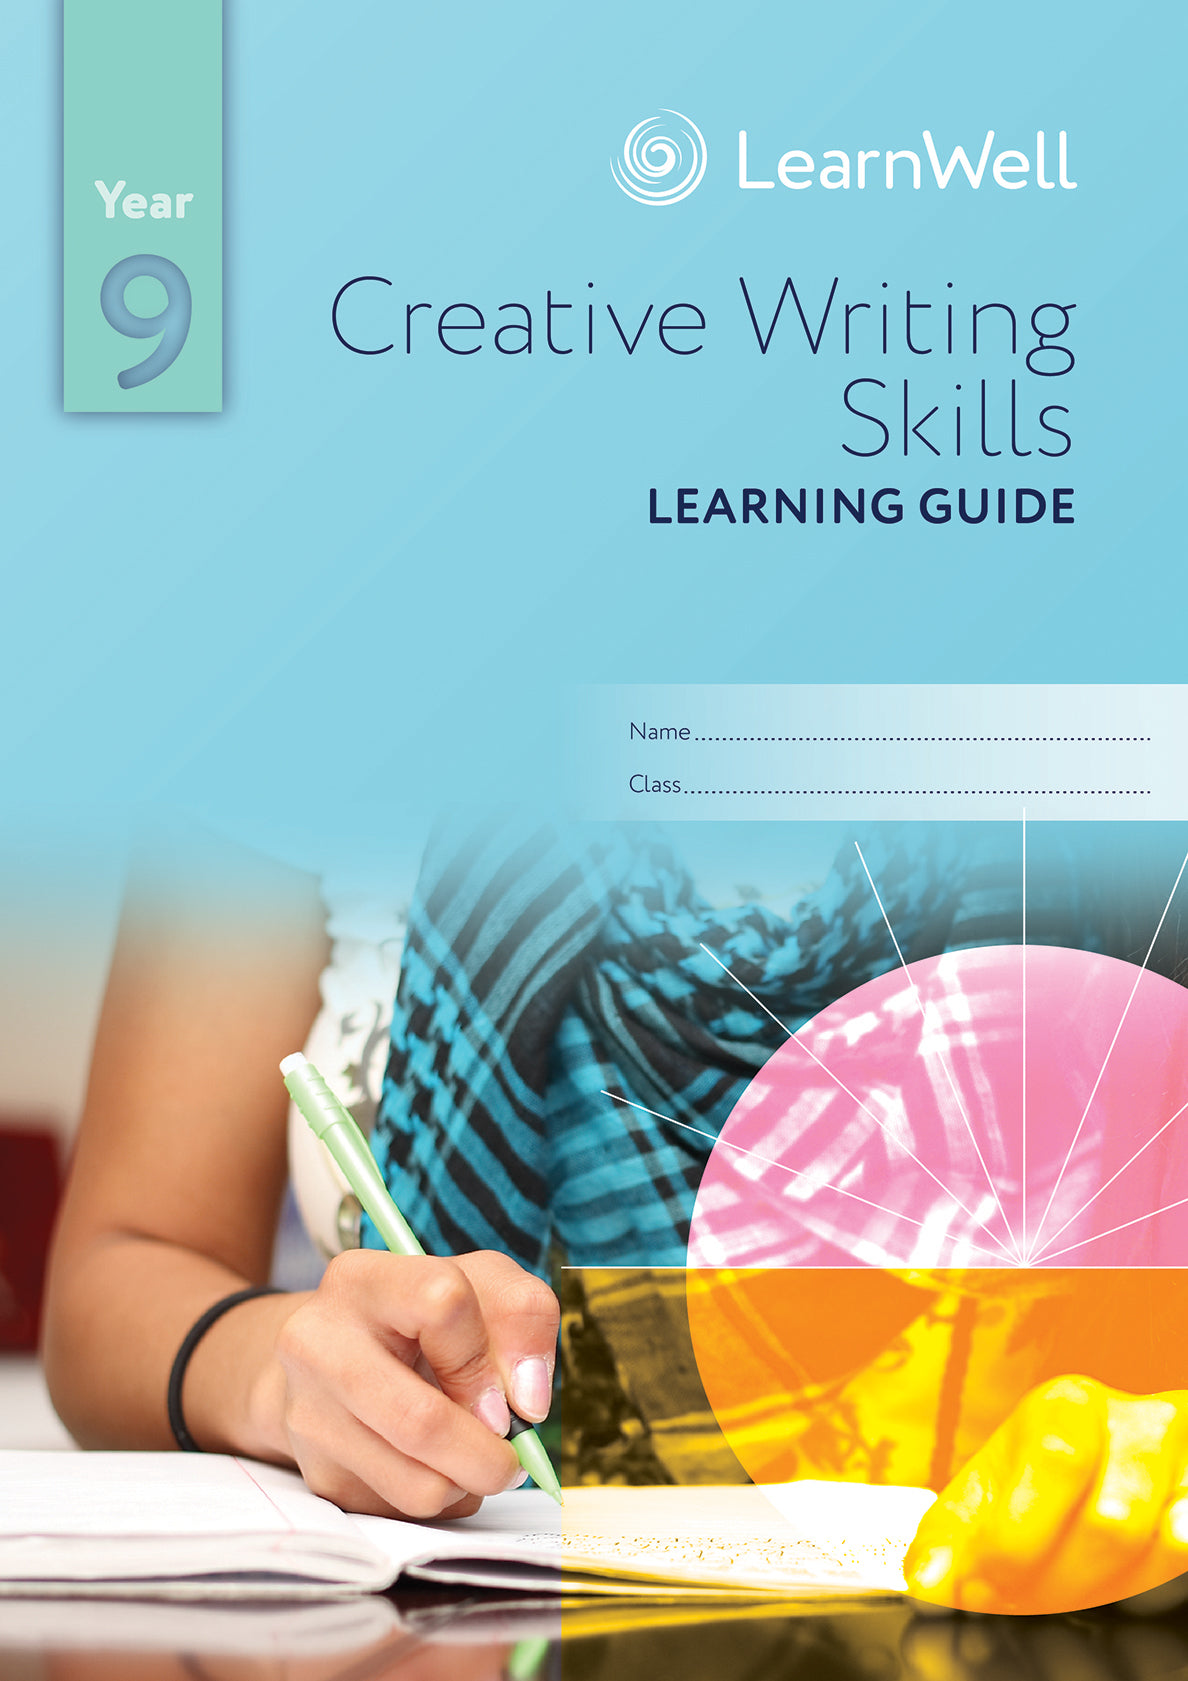 Year 9 Creative Writing Skills Learning Guide